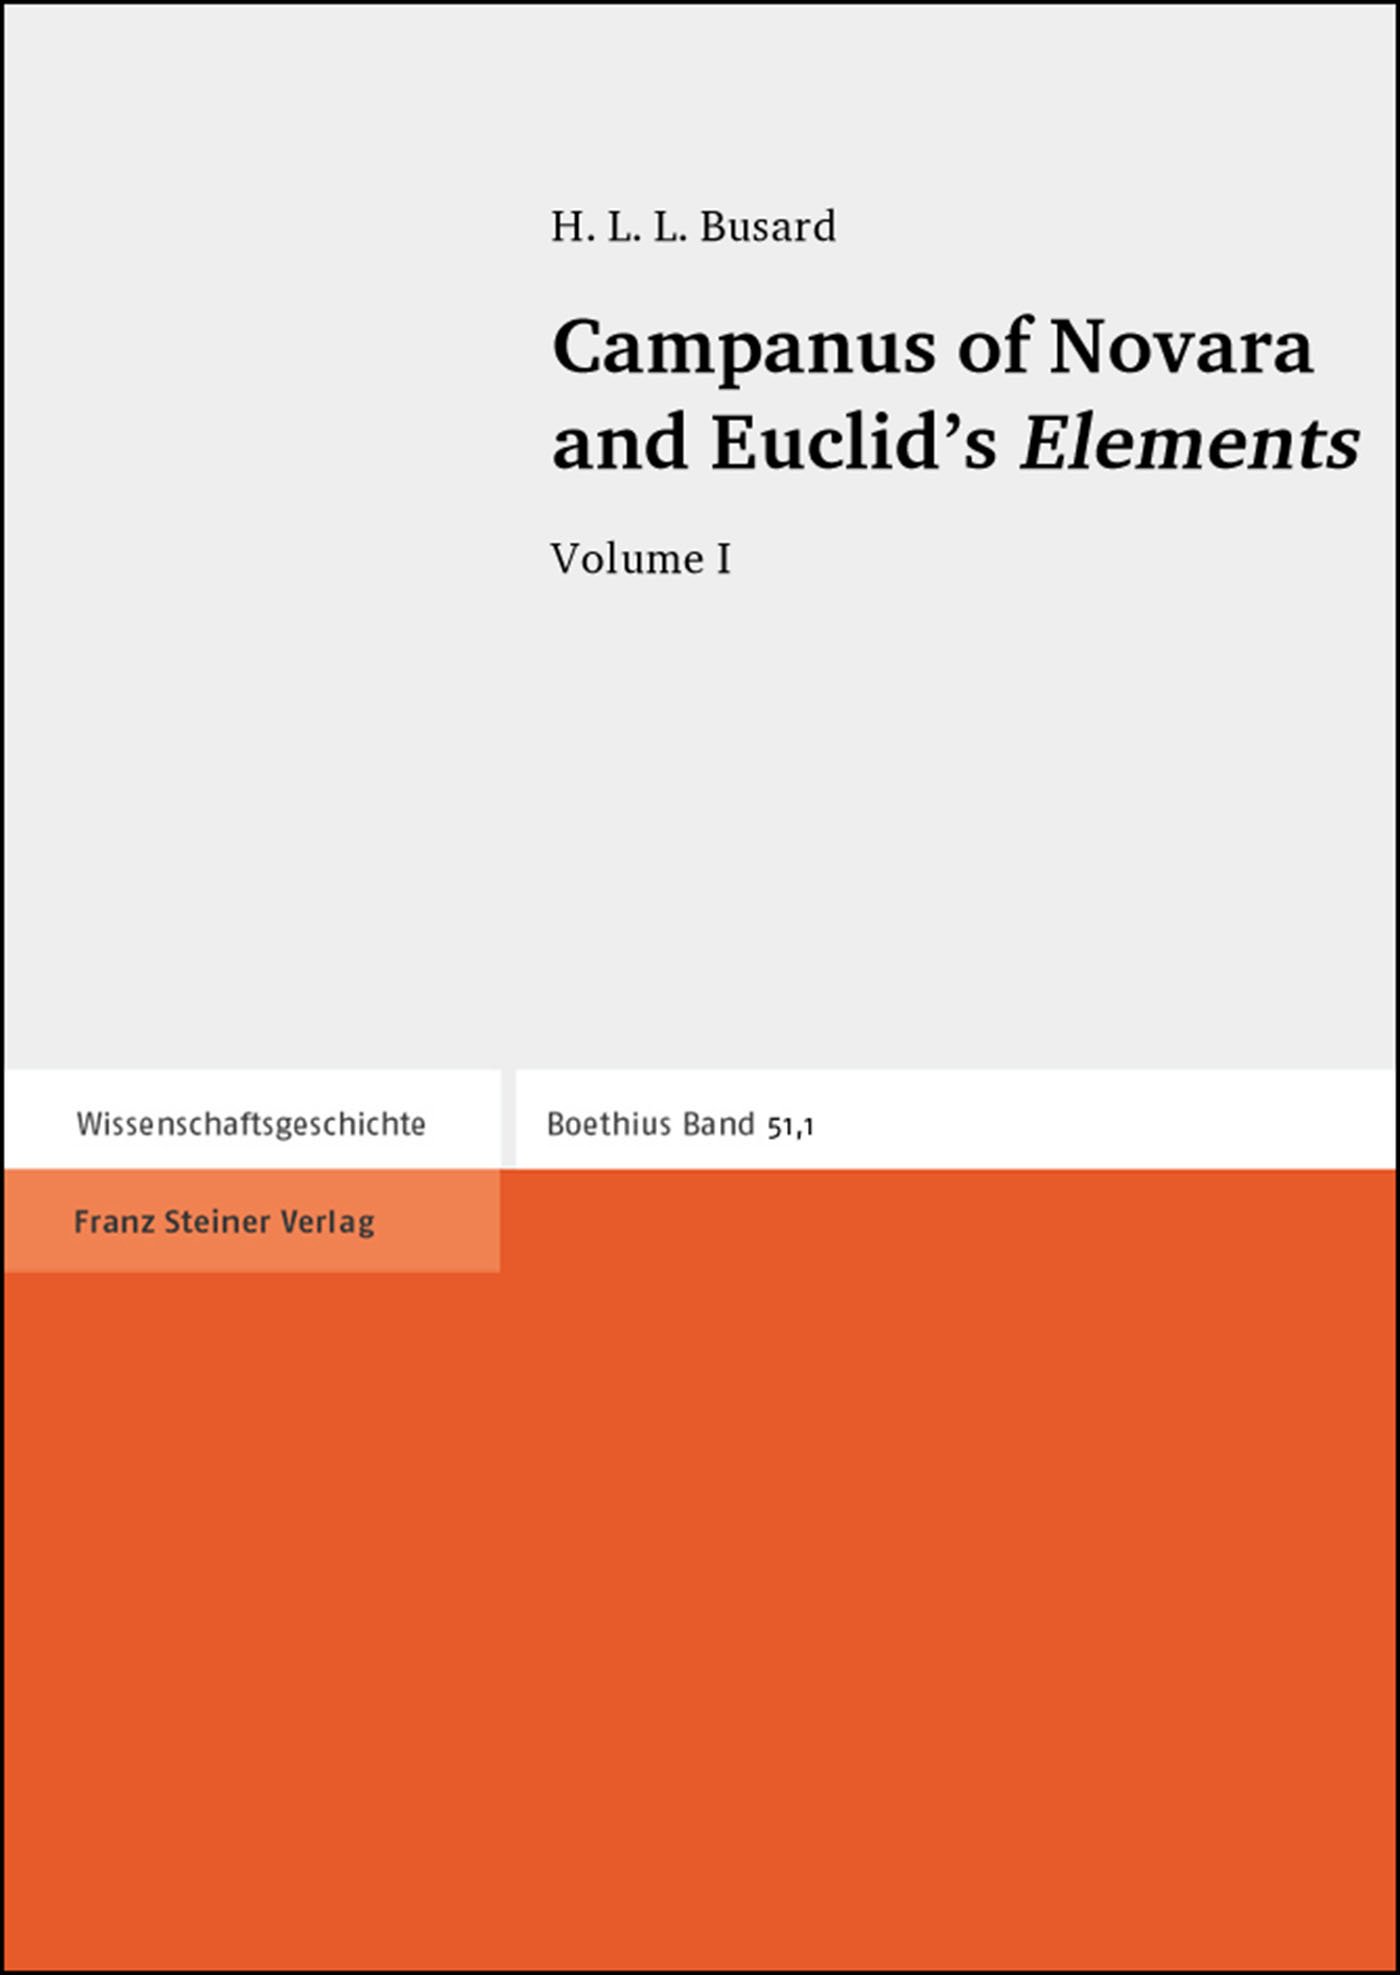 Campanus of Novara and Euclid’s Elements